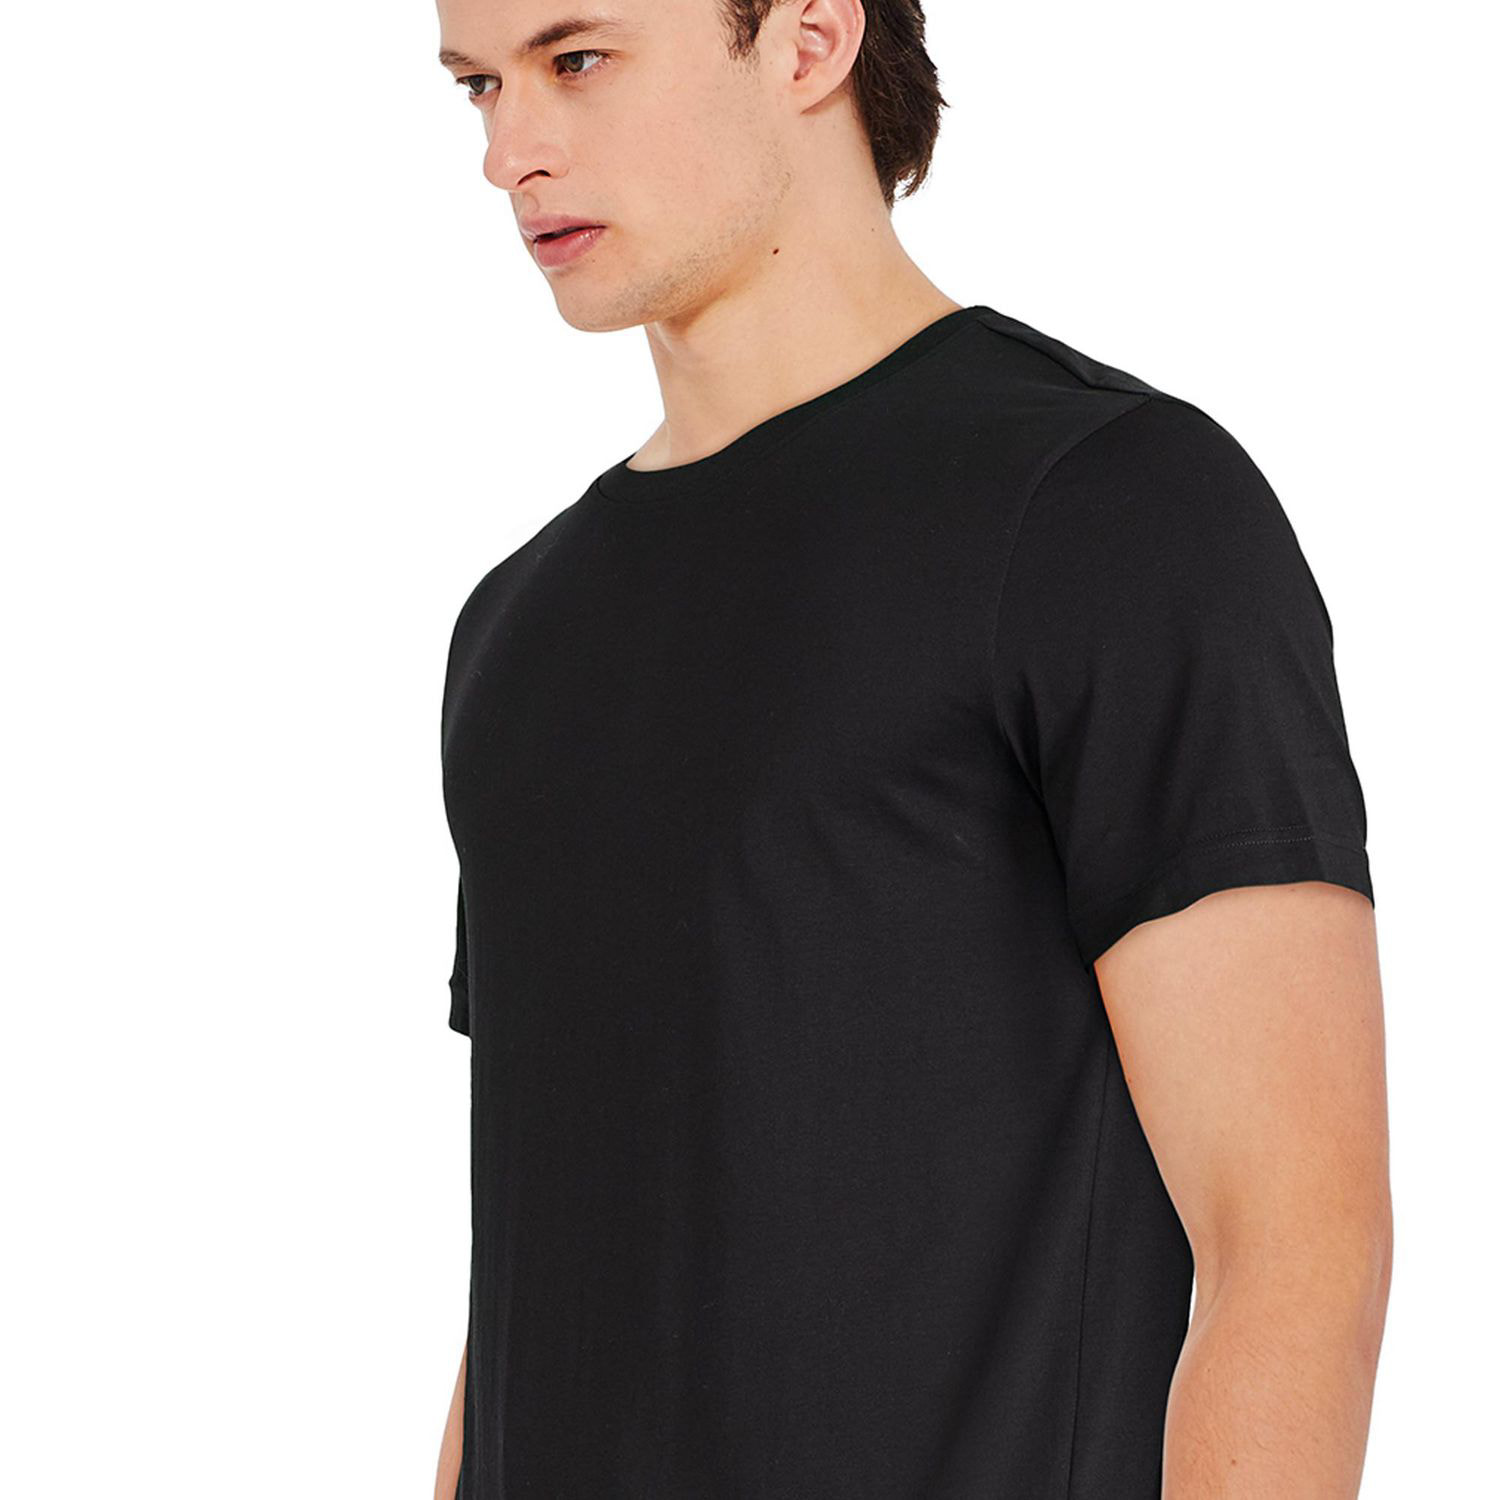 WALMART Associate Employee Uniform Polo Shirt Black Size M Medium